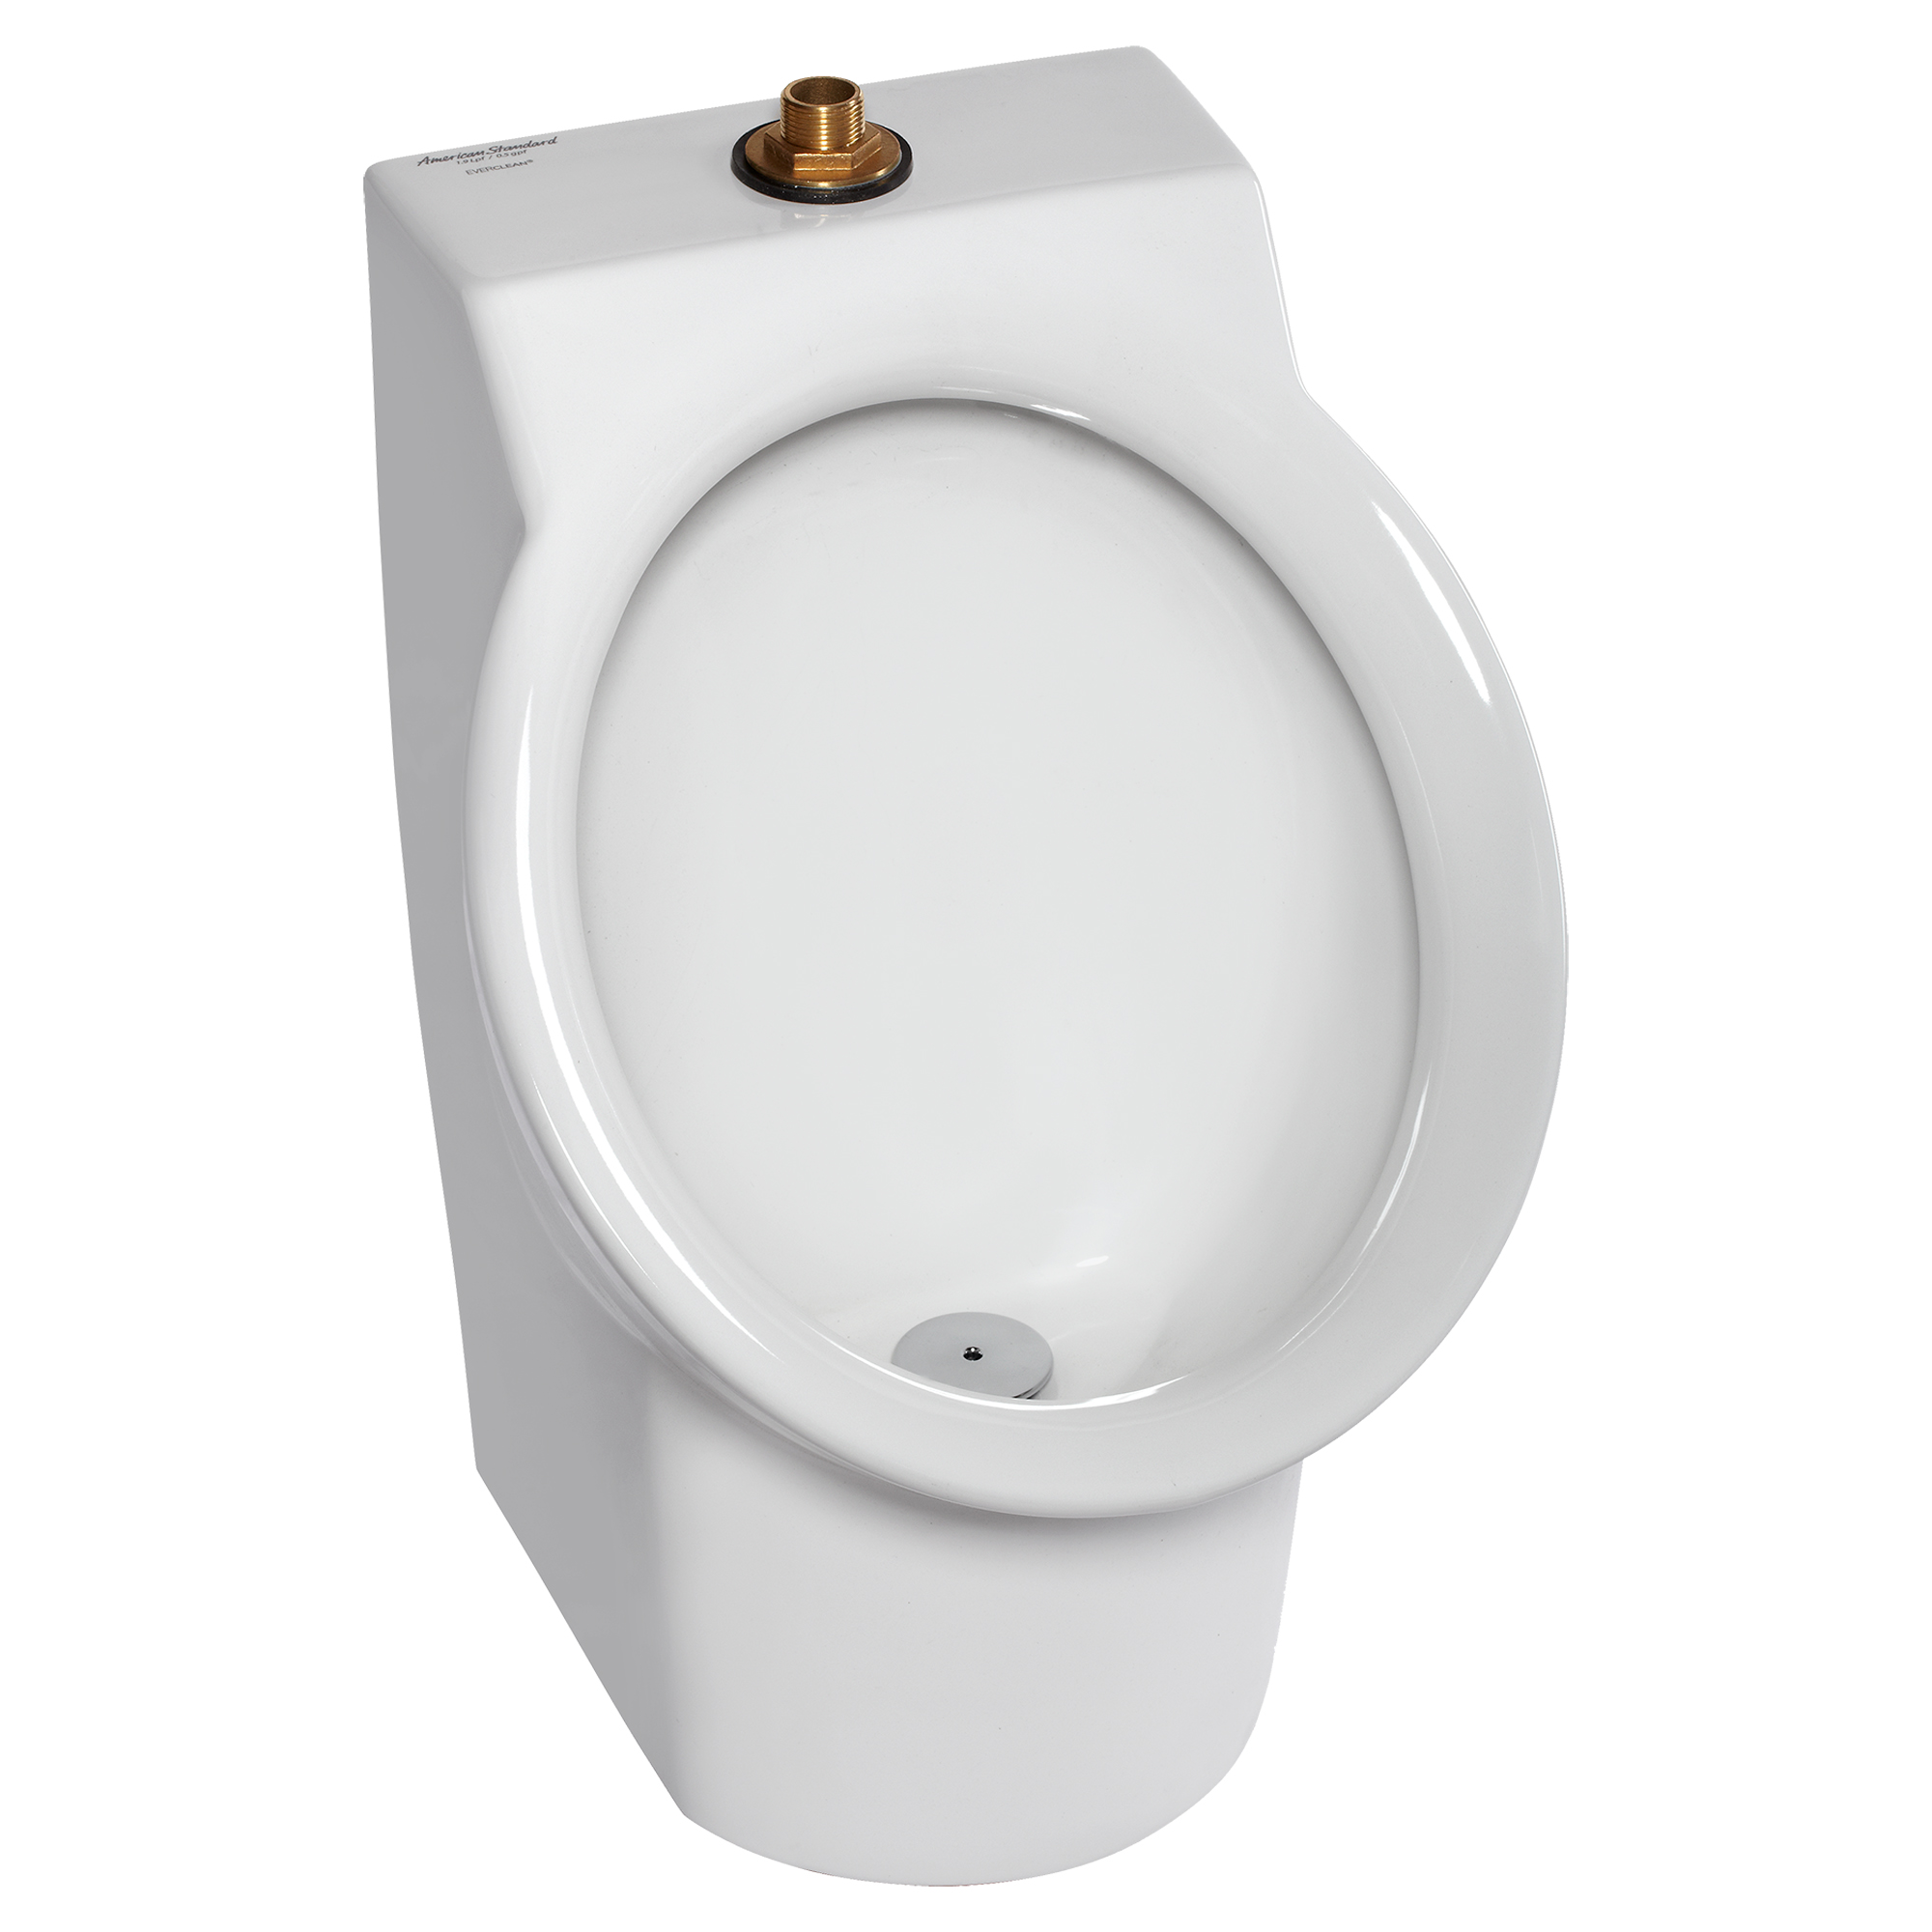 Decorum High Efficiency Urinal in White 0.125 gpf